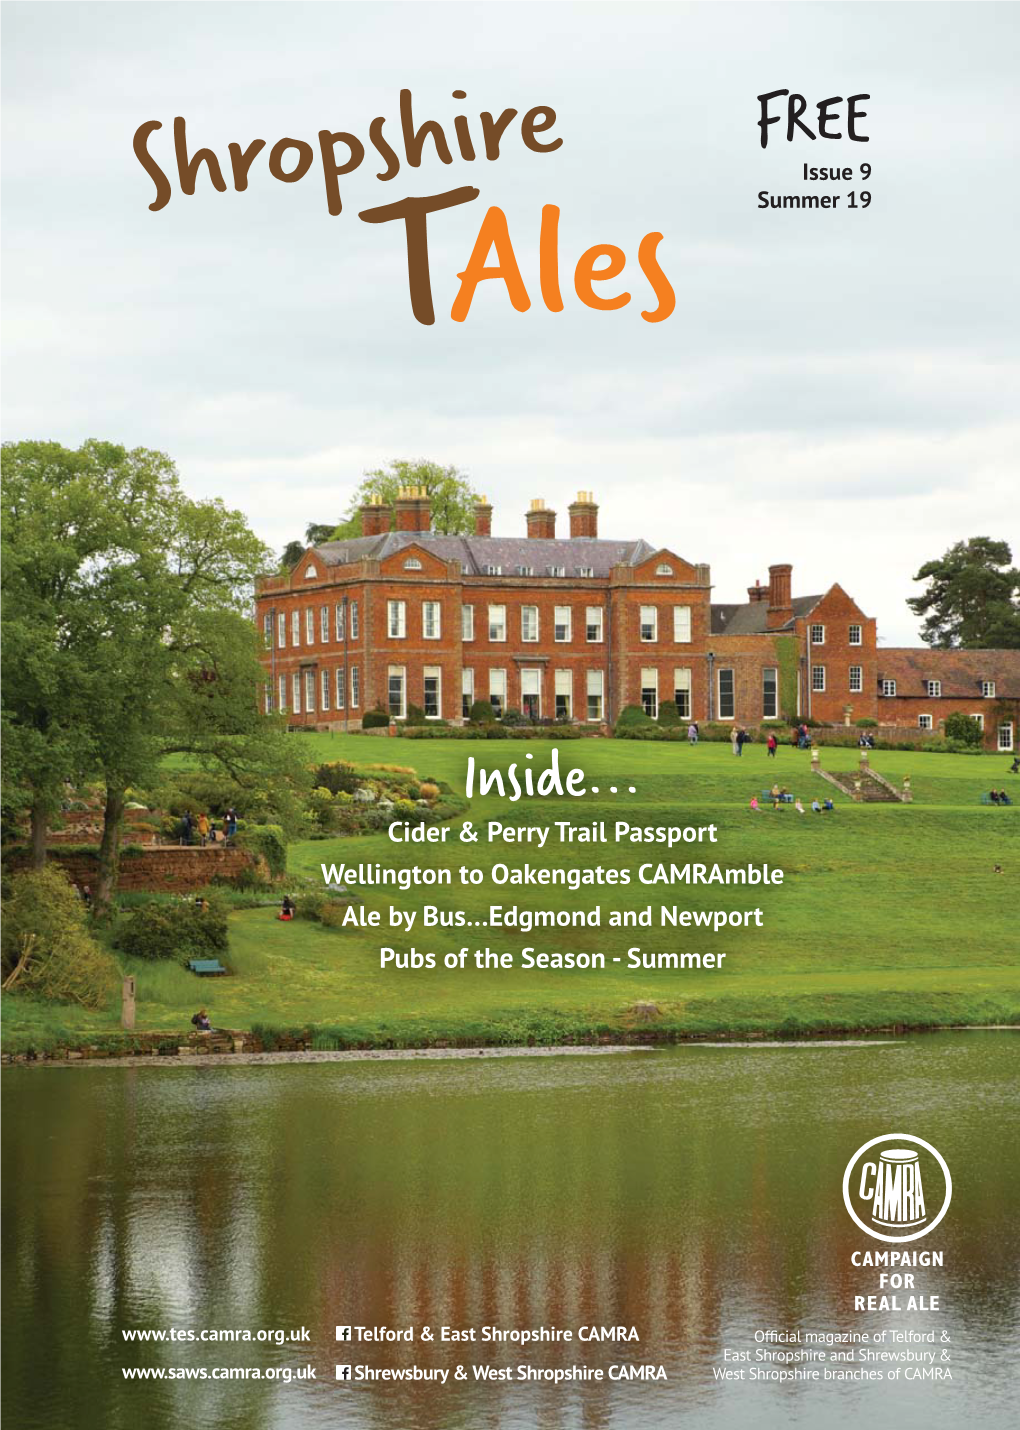 Shropshire Tales Issue 9